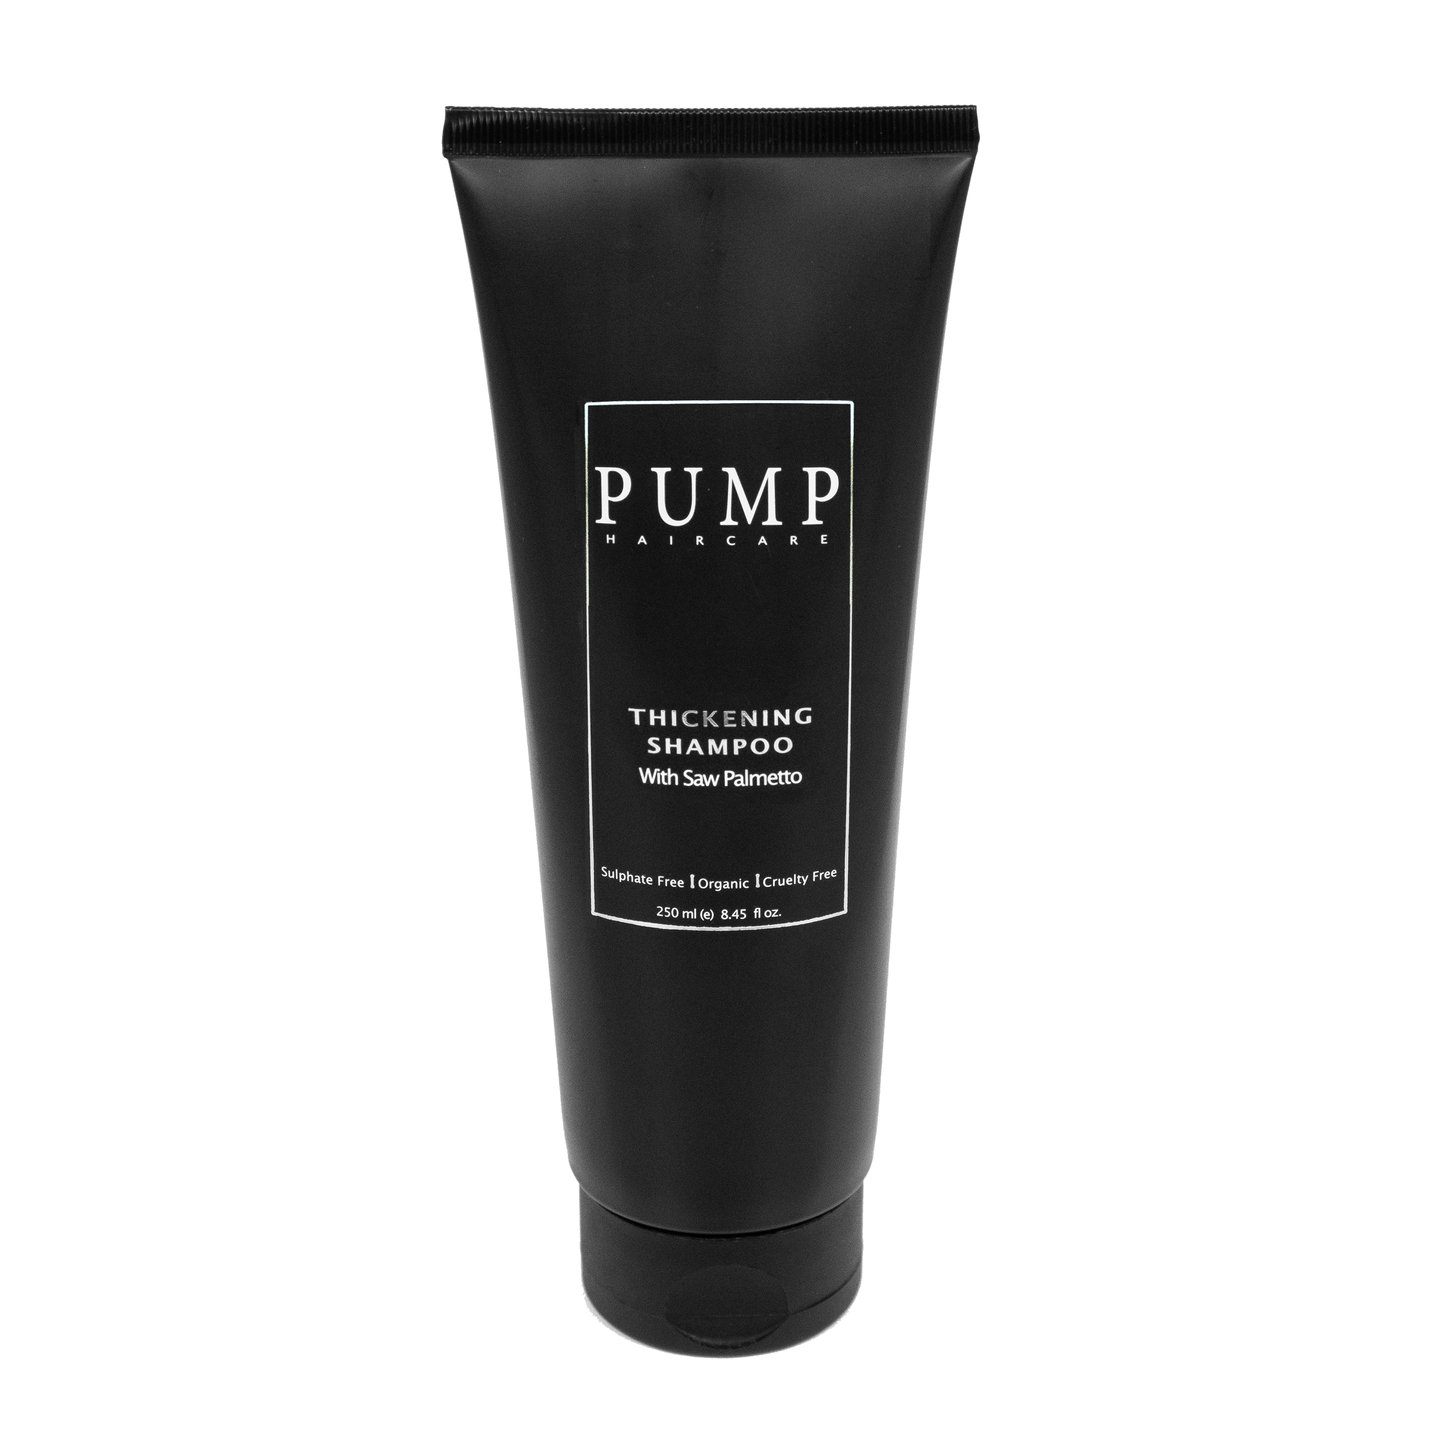 Pump Haircare Thickening Shampoo